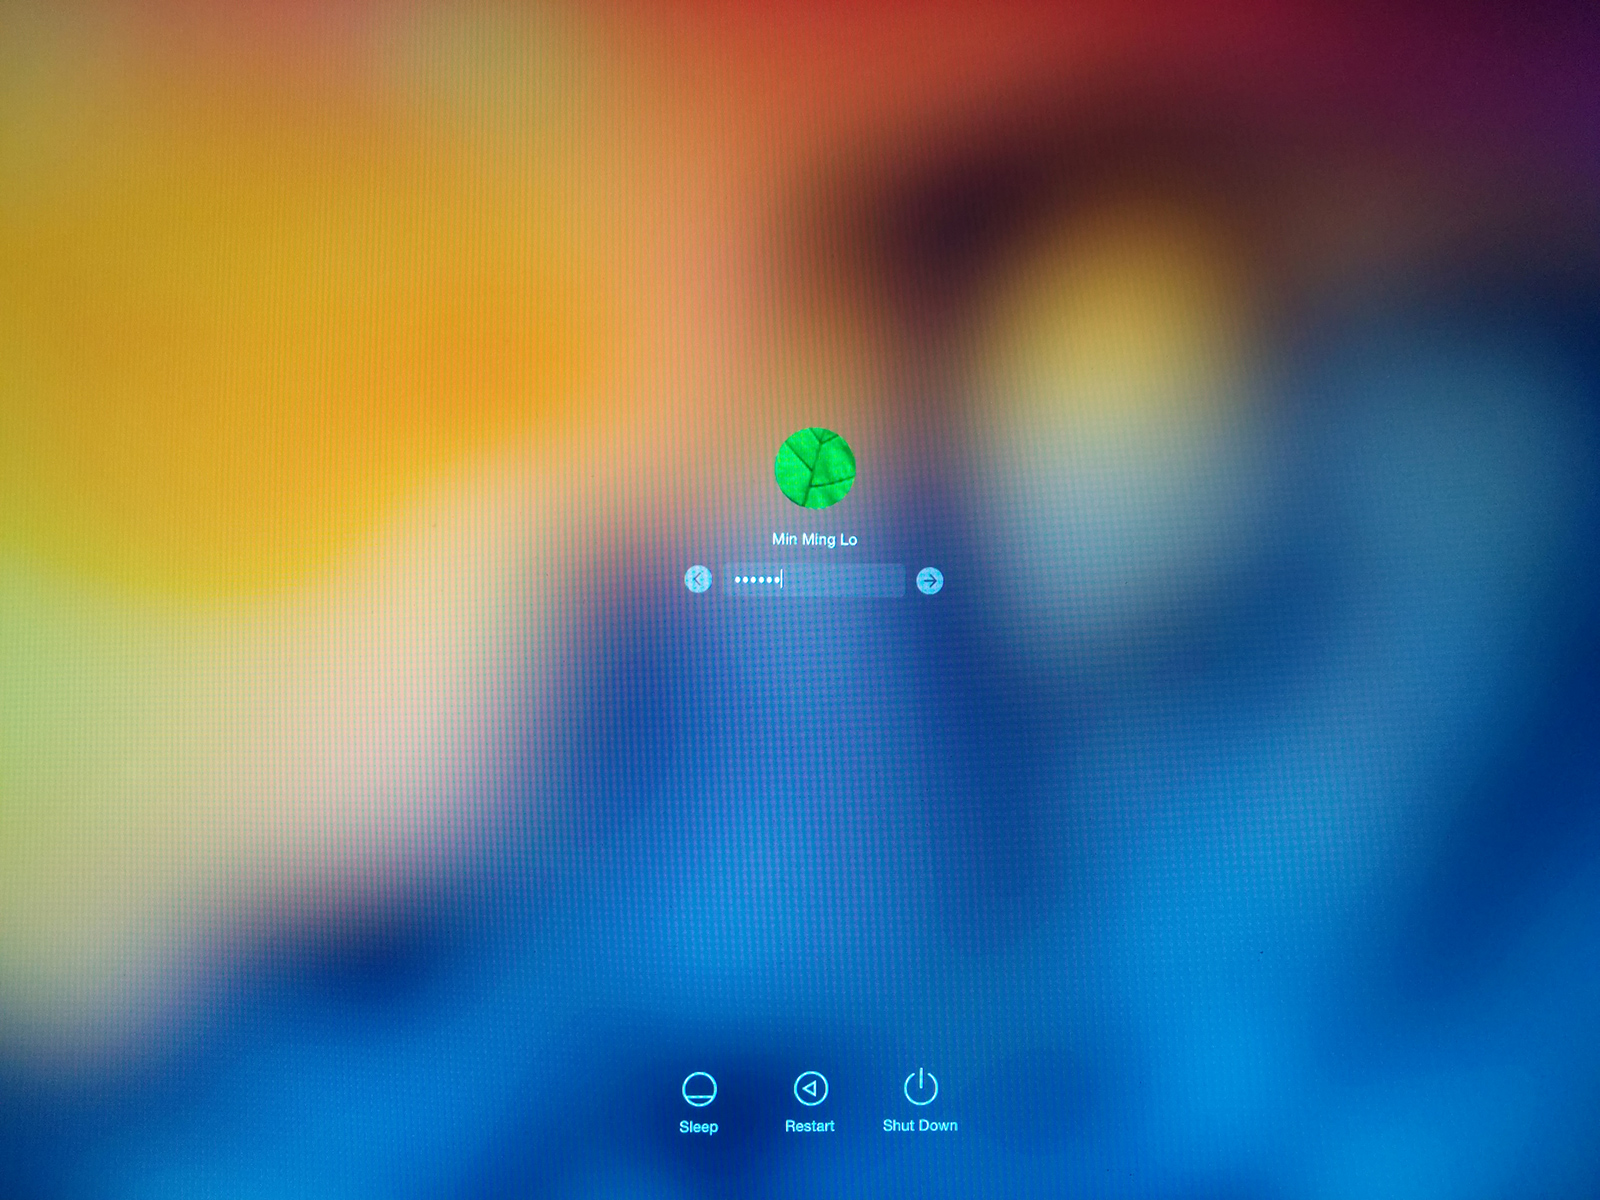 Mac OS X Yosemite's login screen is nicely done